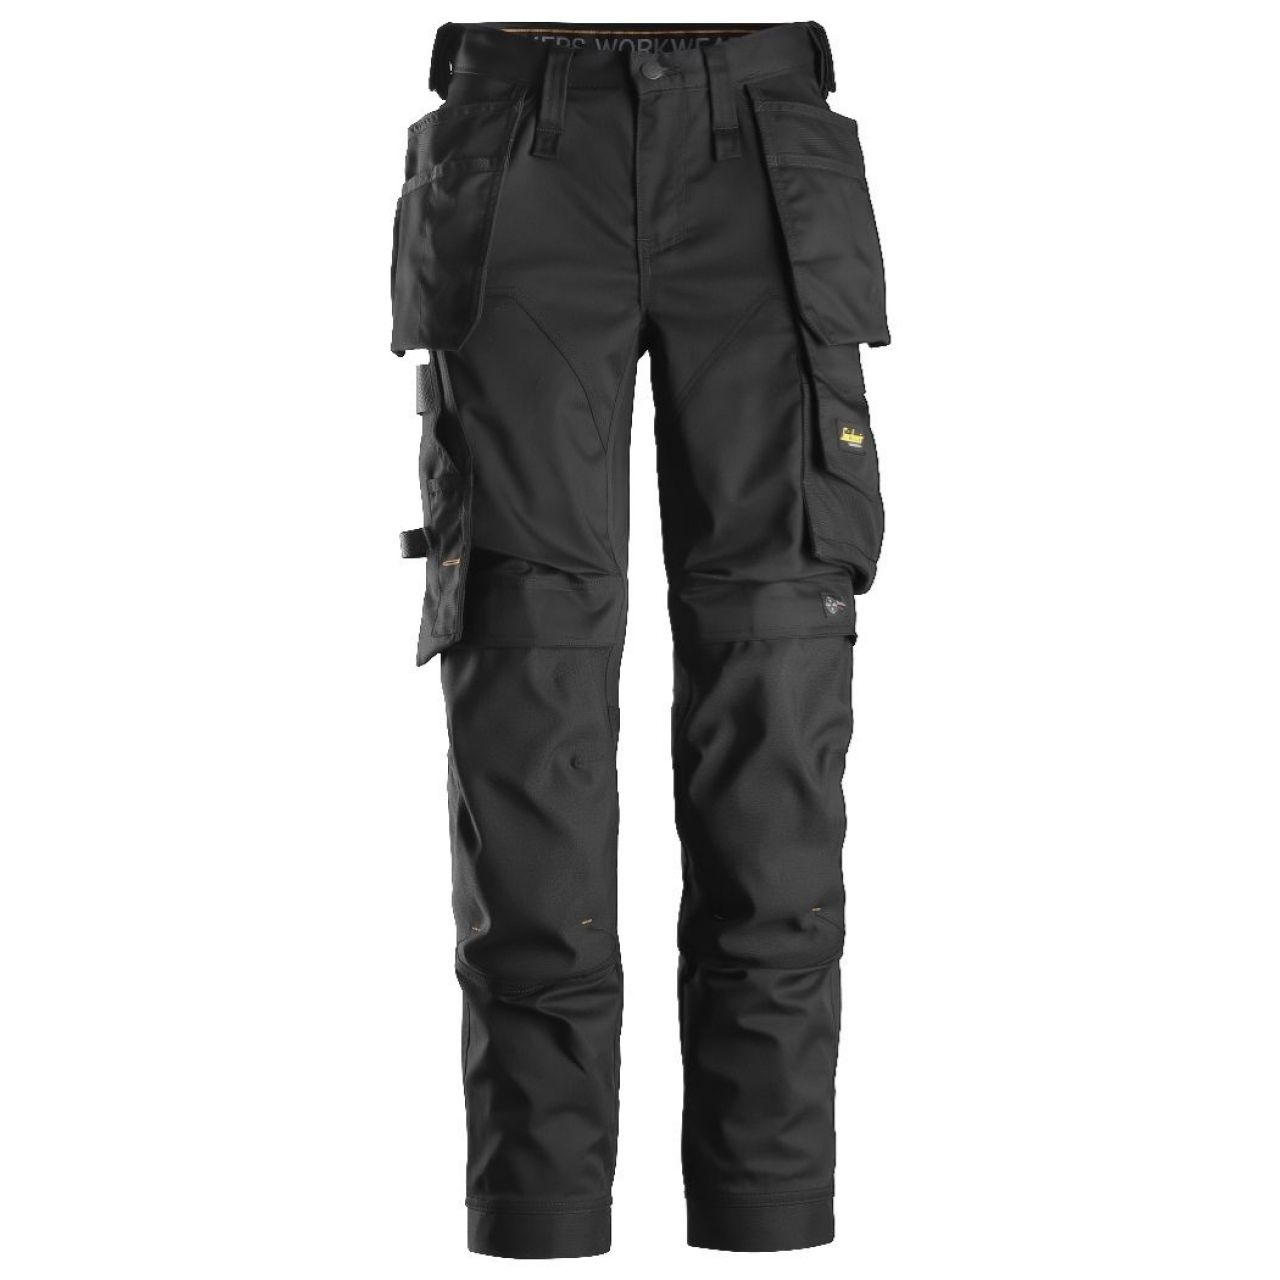 Pantalon elastico mujer bolsillos flotantes AllroundWork negro talla 020